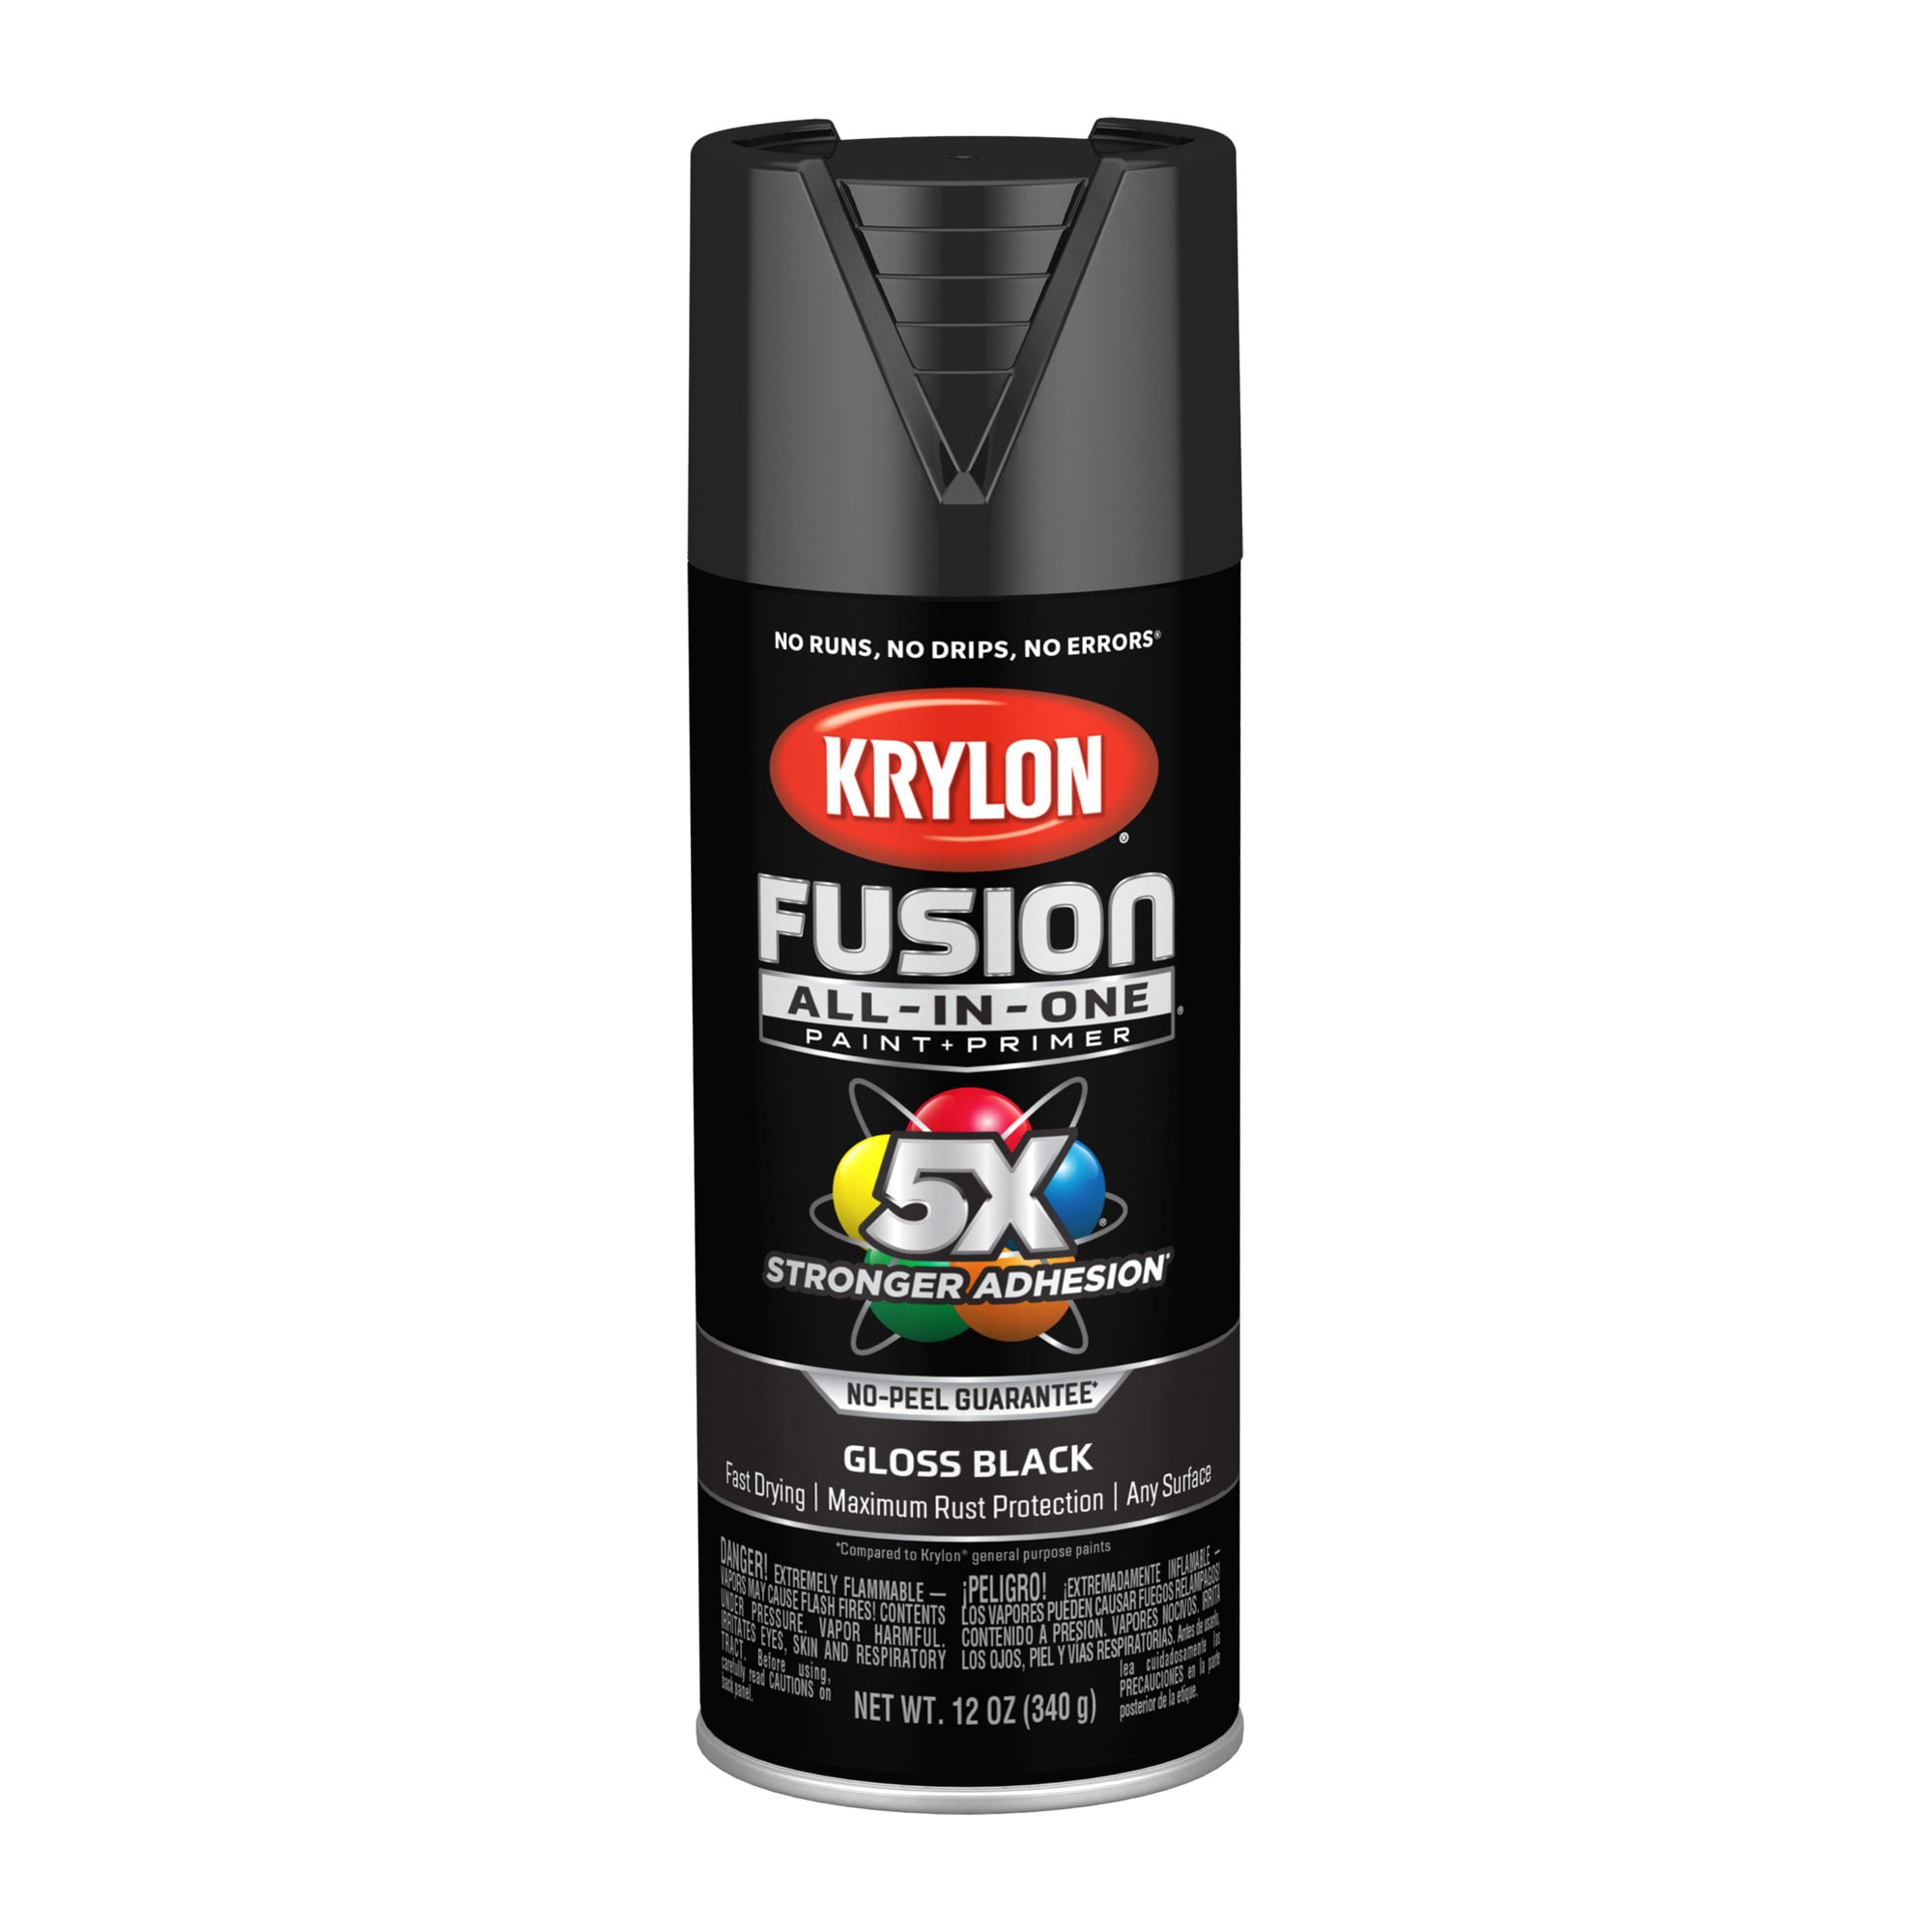 Krylon Appliance Epoxy Gloss White Spray Paint (NET WT. 12-oz) in